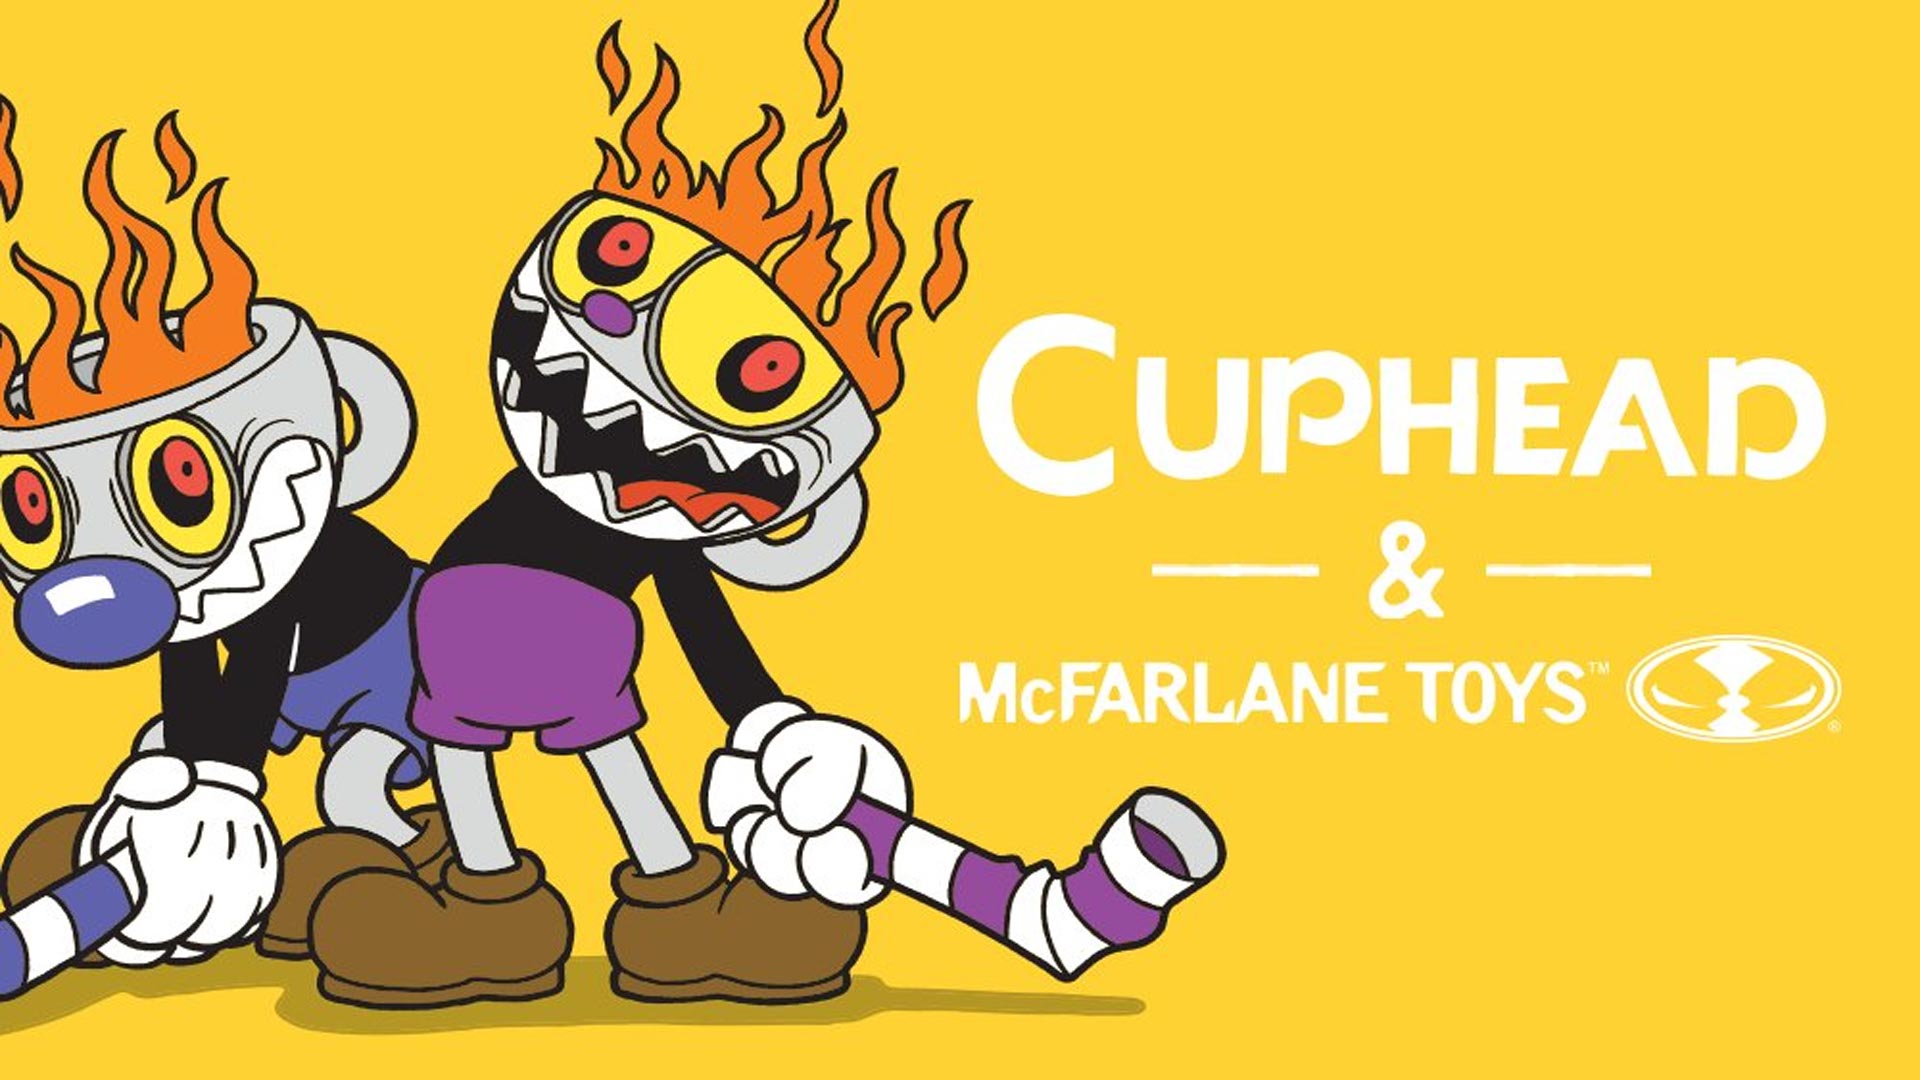 Mcfarlane Cuphead Construction Sets Announced Gamerheadquarters